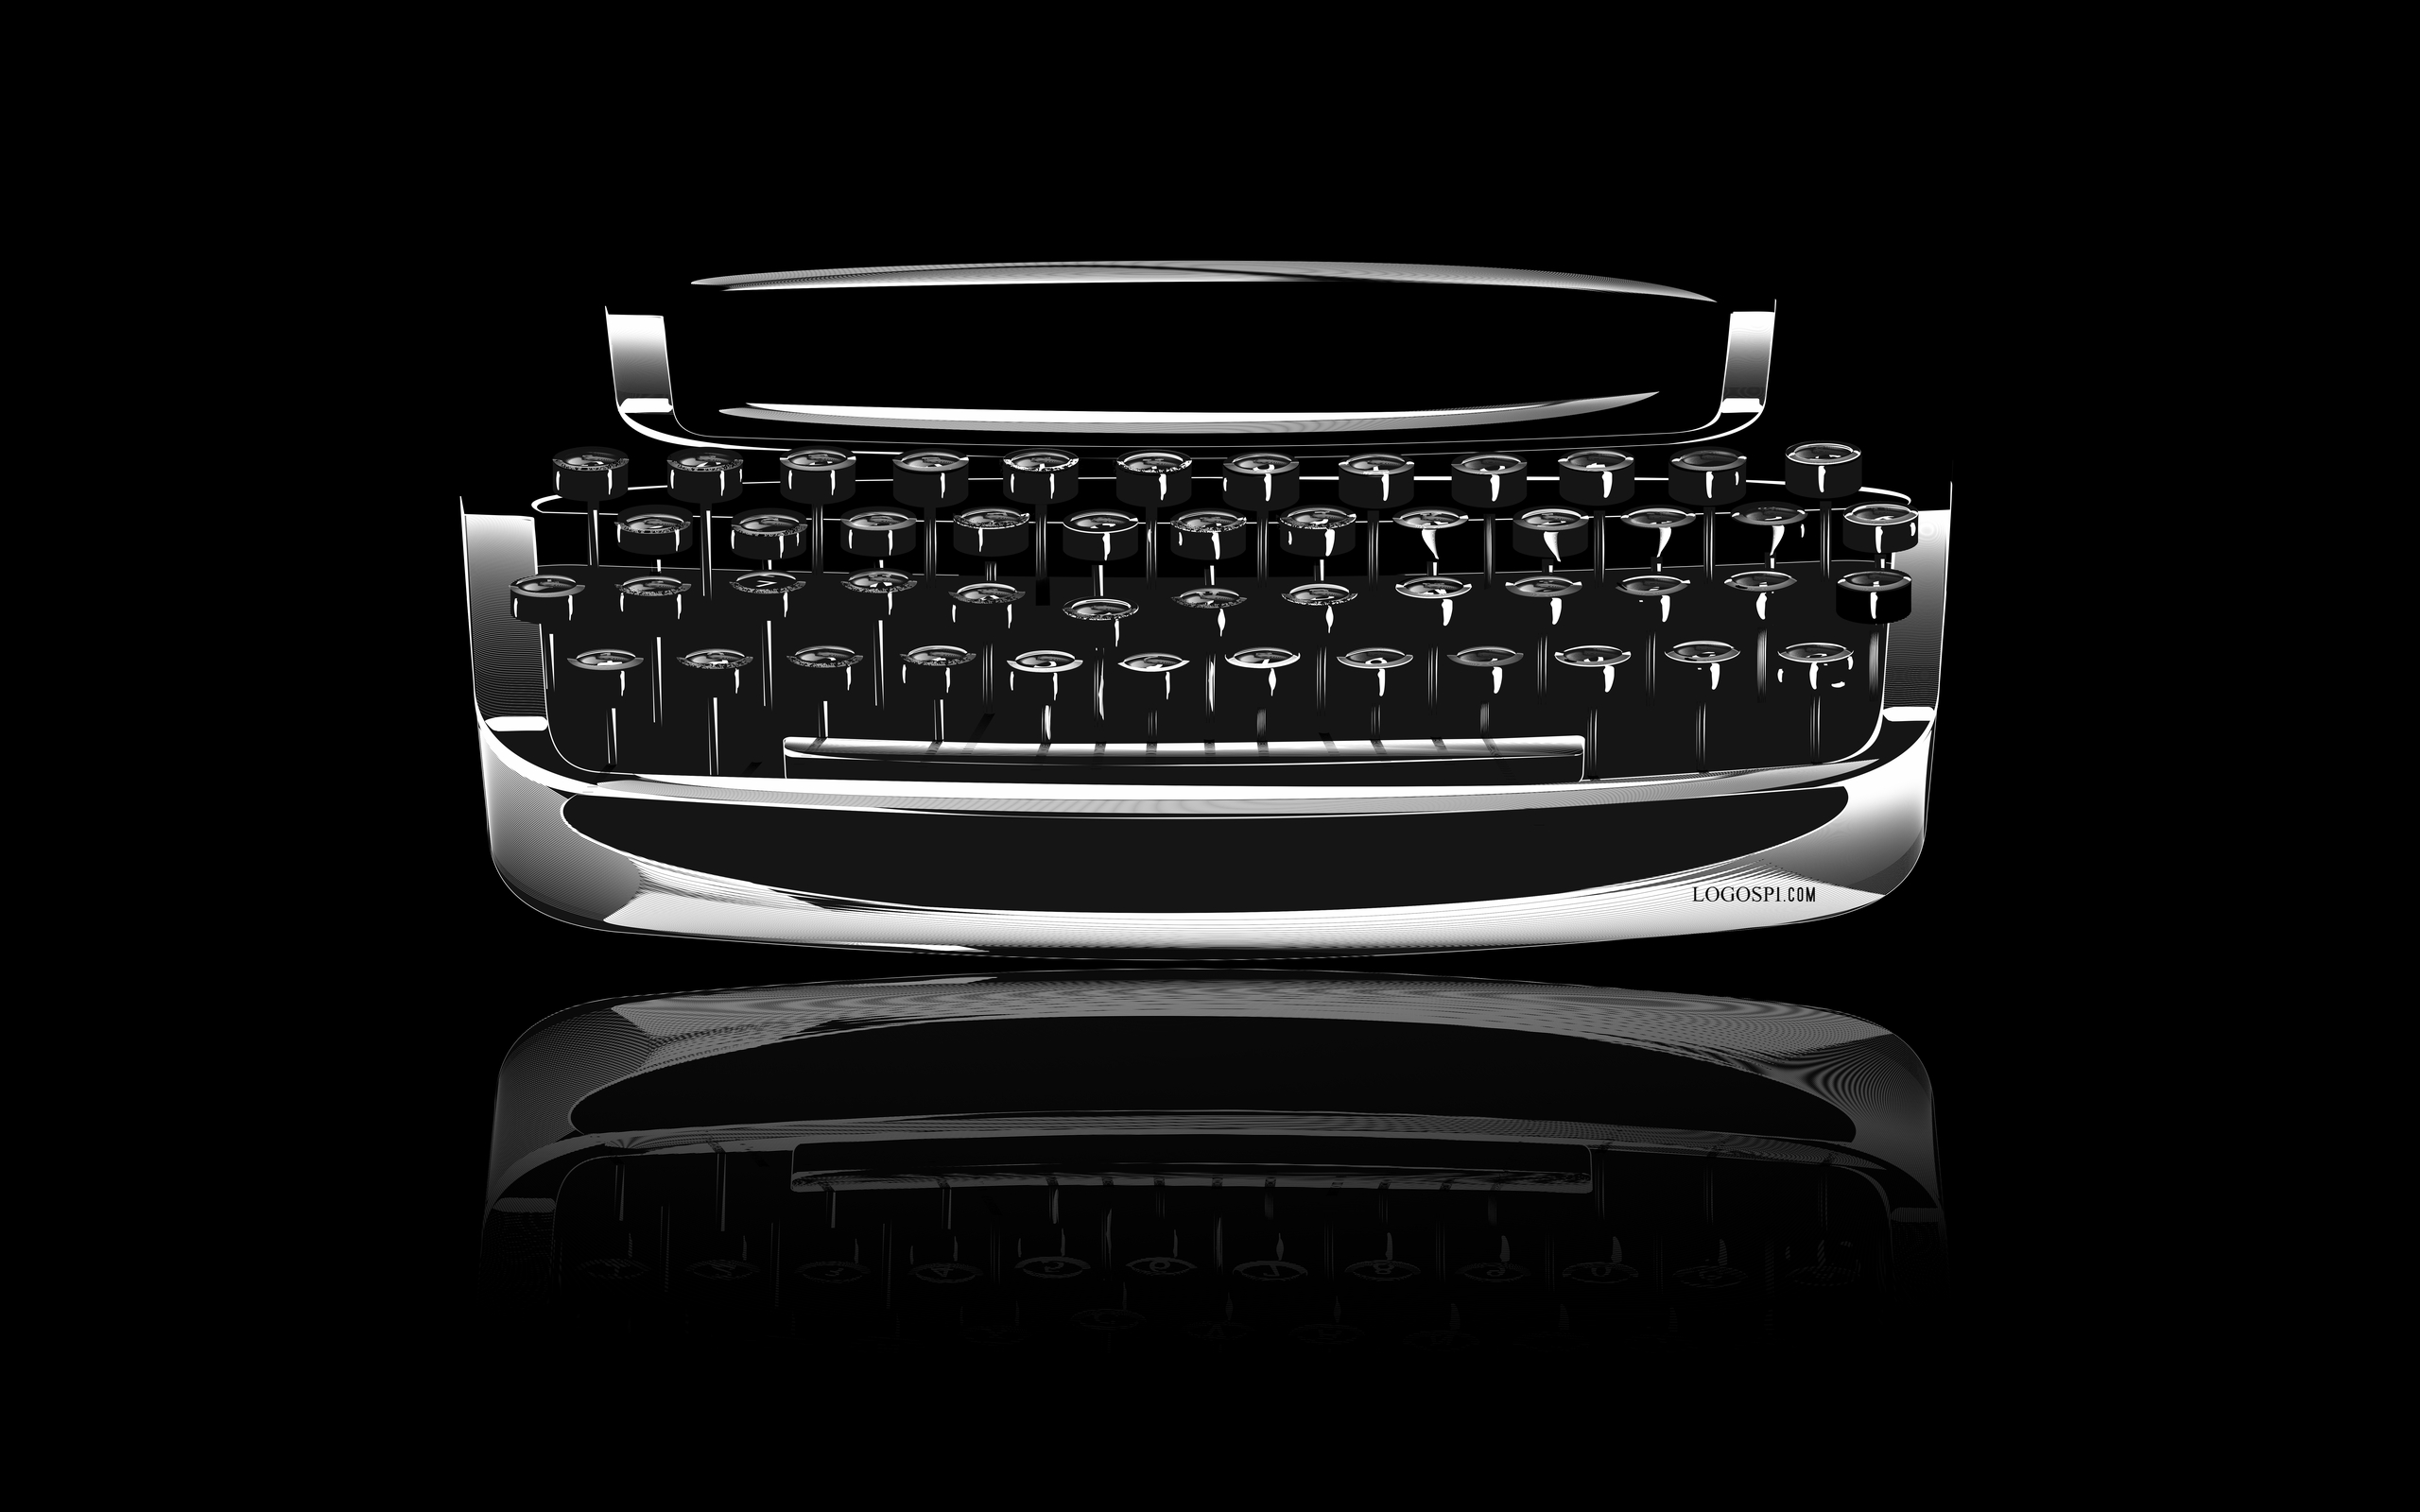 Construction Humaine Typewriter Fond d'écran HD | Image